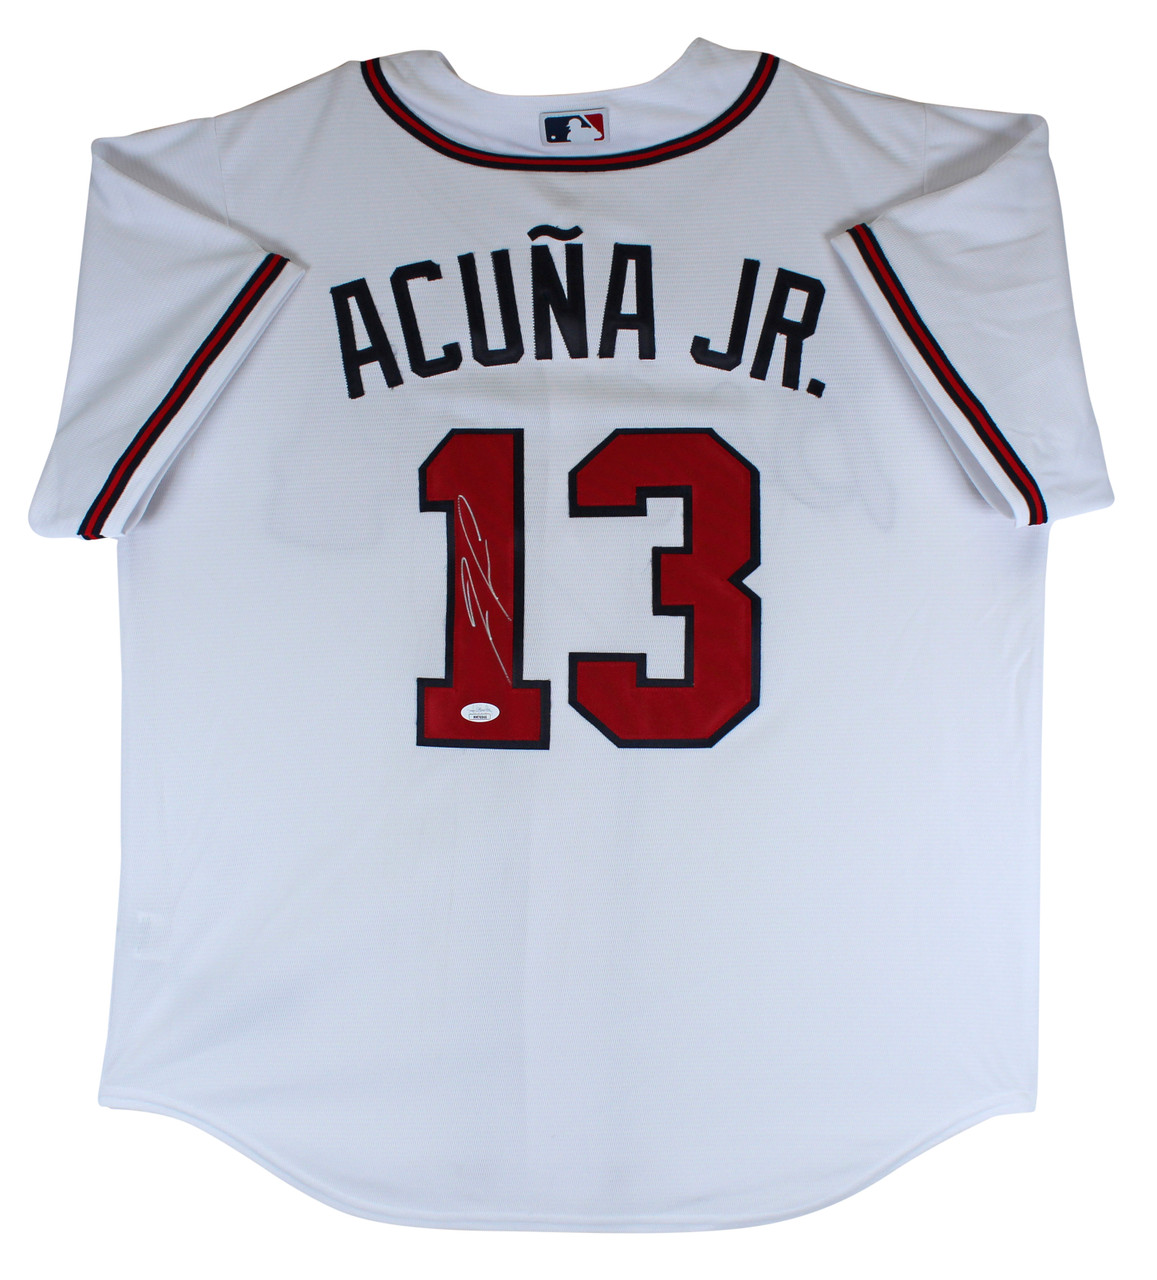 Atlanta Braves Ronald Acuna Jr. Autographed Blue Nike Jersey Size